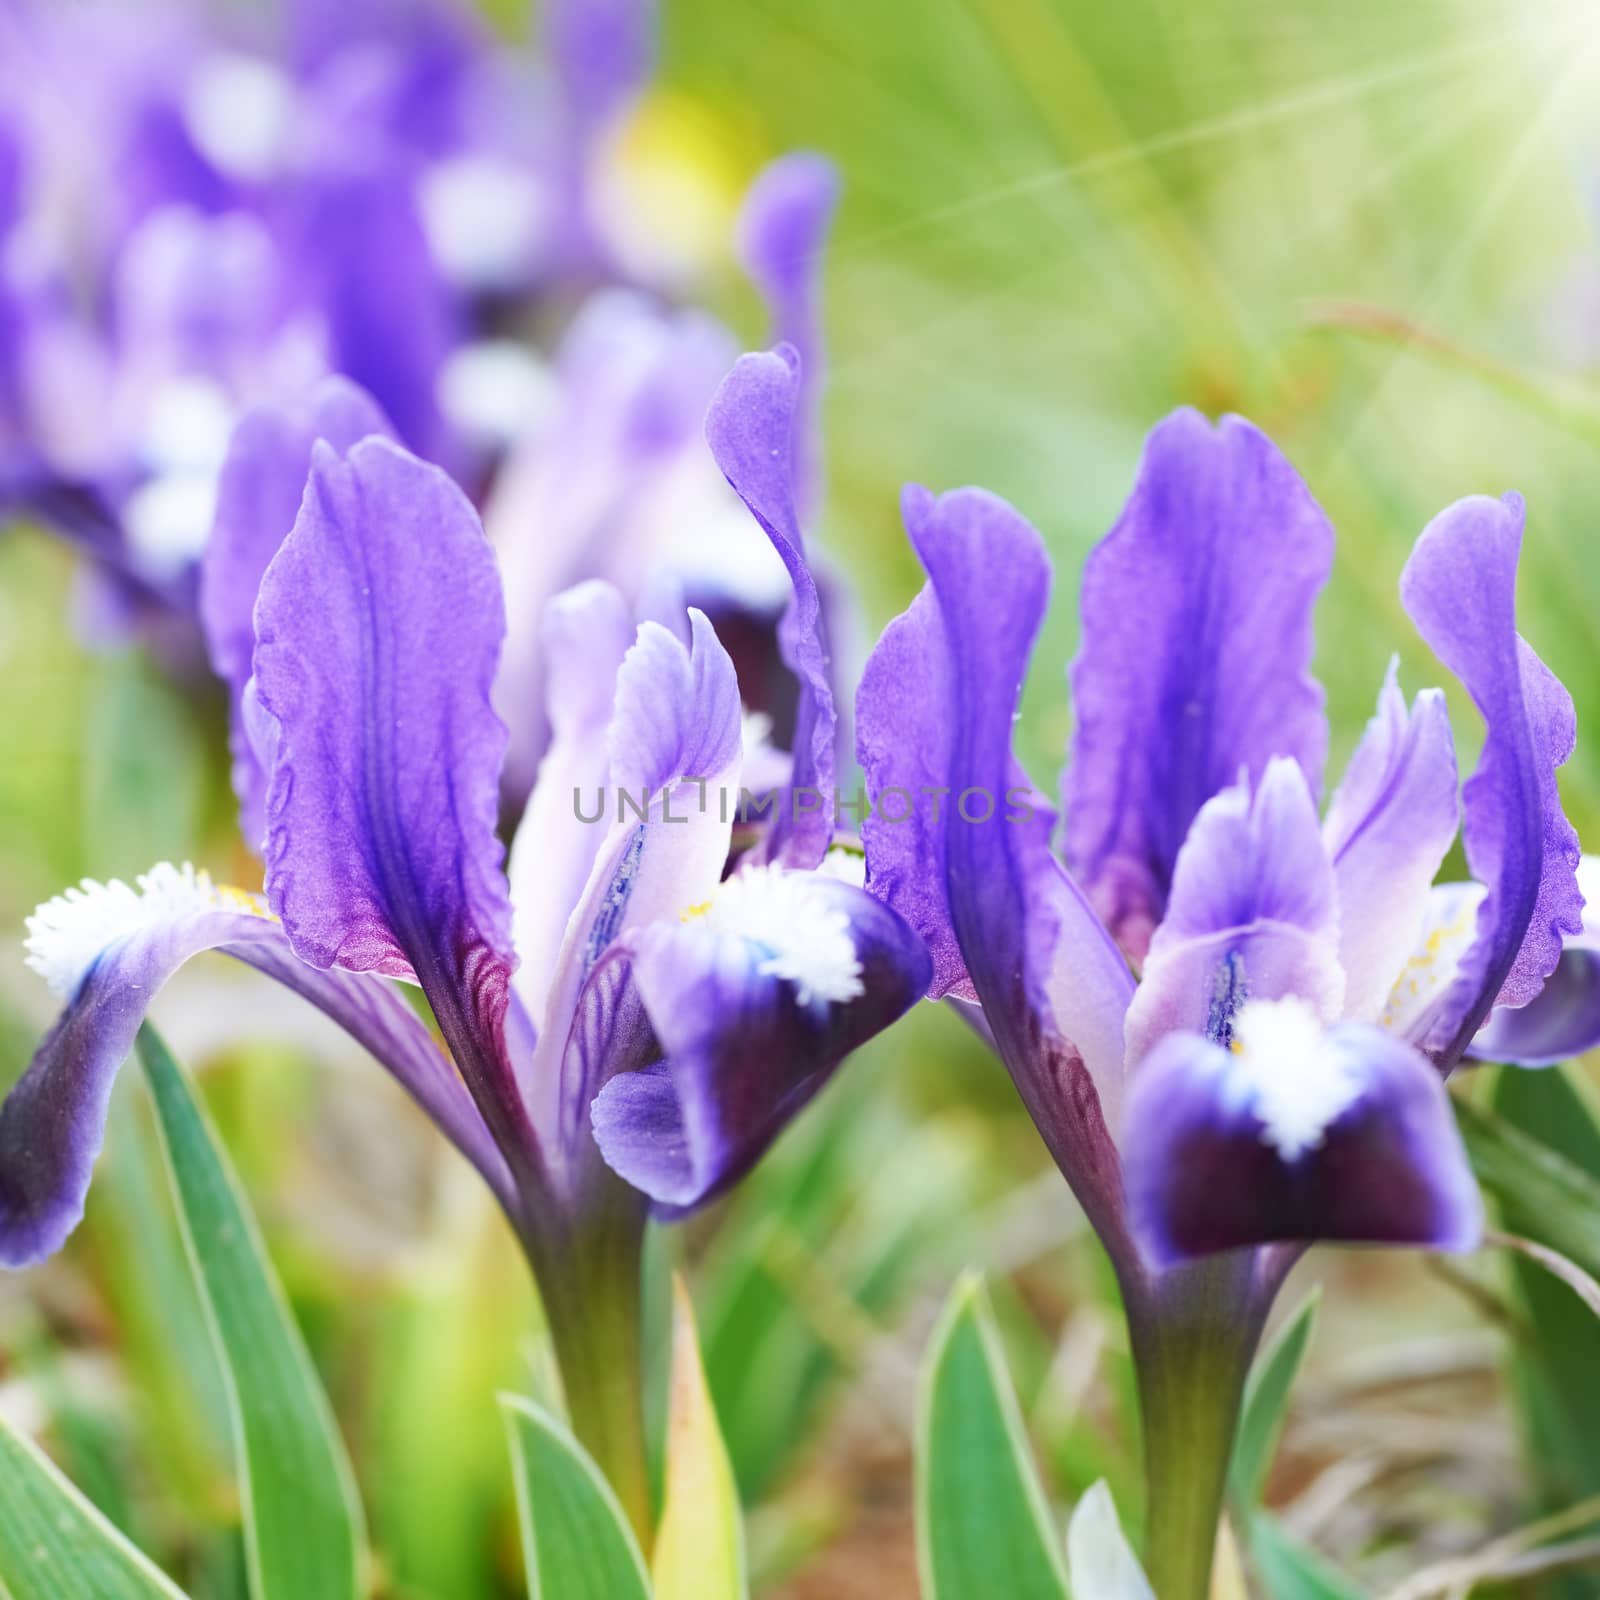 Flowerbed of purple irises by vapi